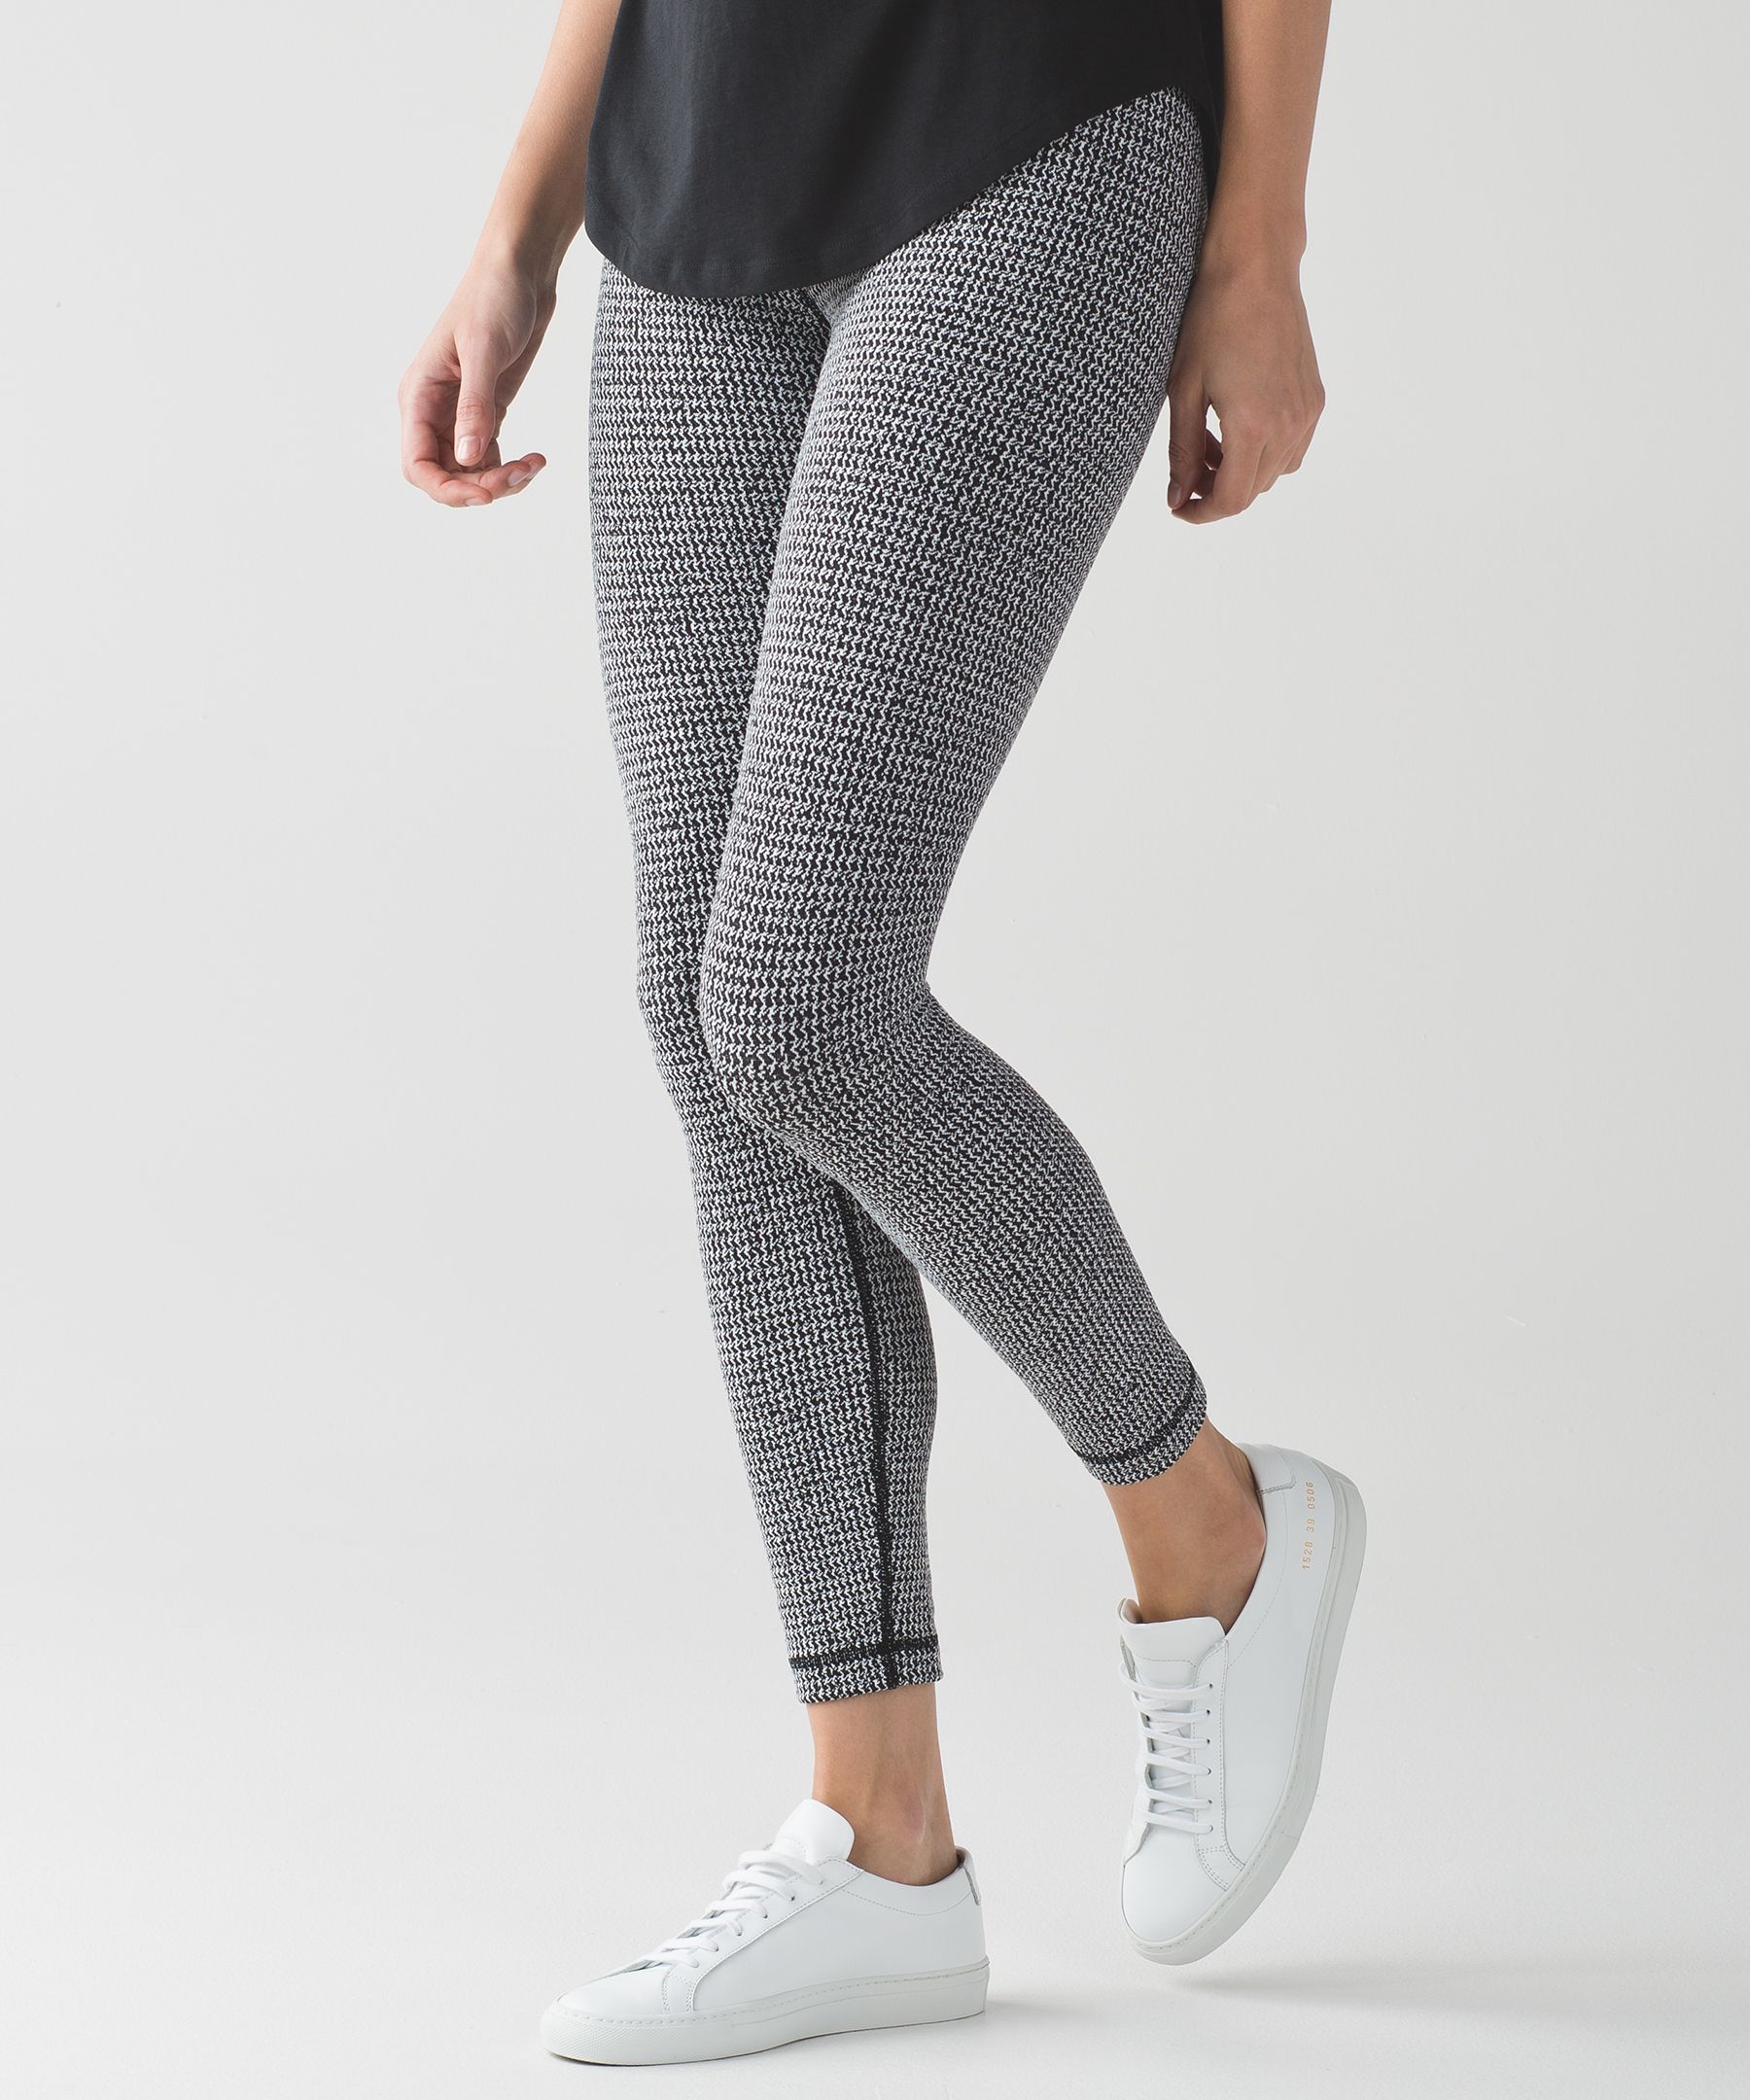 Lululemon Yoga Pants reviews in Athletic Wear - ChickAdvisor